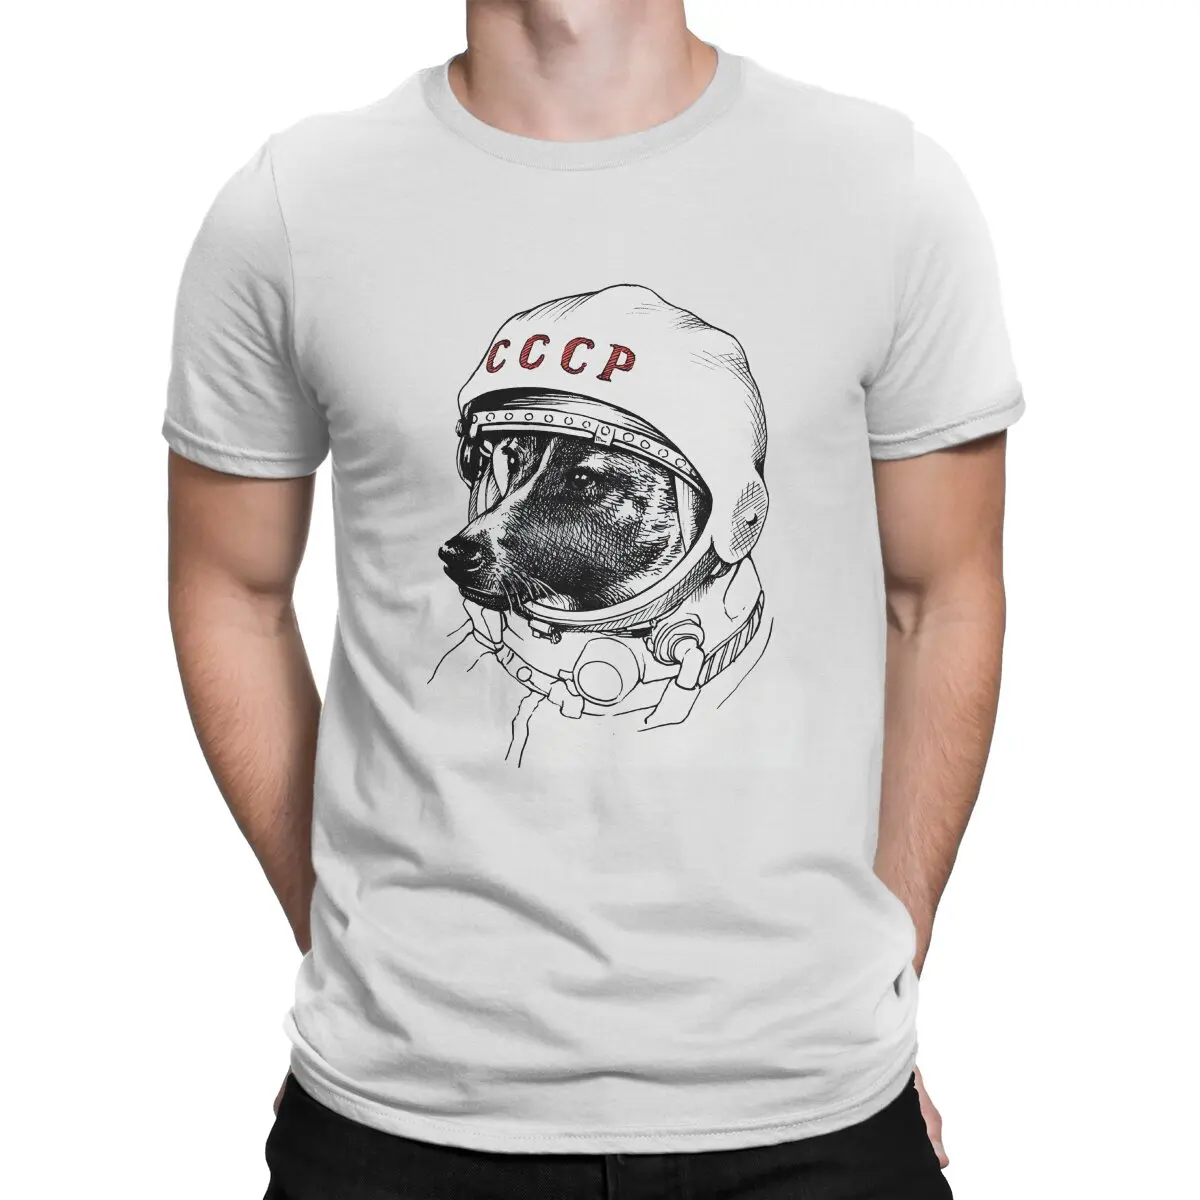 

Laika Space Traveler Man's TShirt The Martian Astronaut Crewneck Tops 100% Cotton T Shirt Humor High Quality Gift Idea